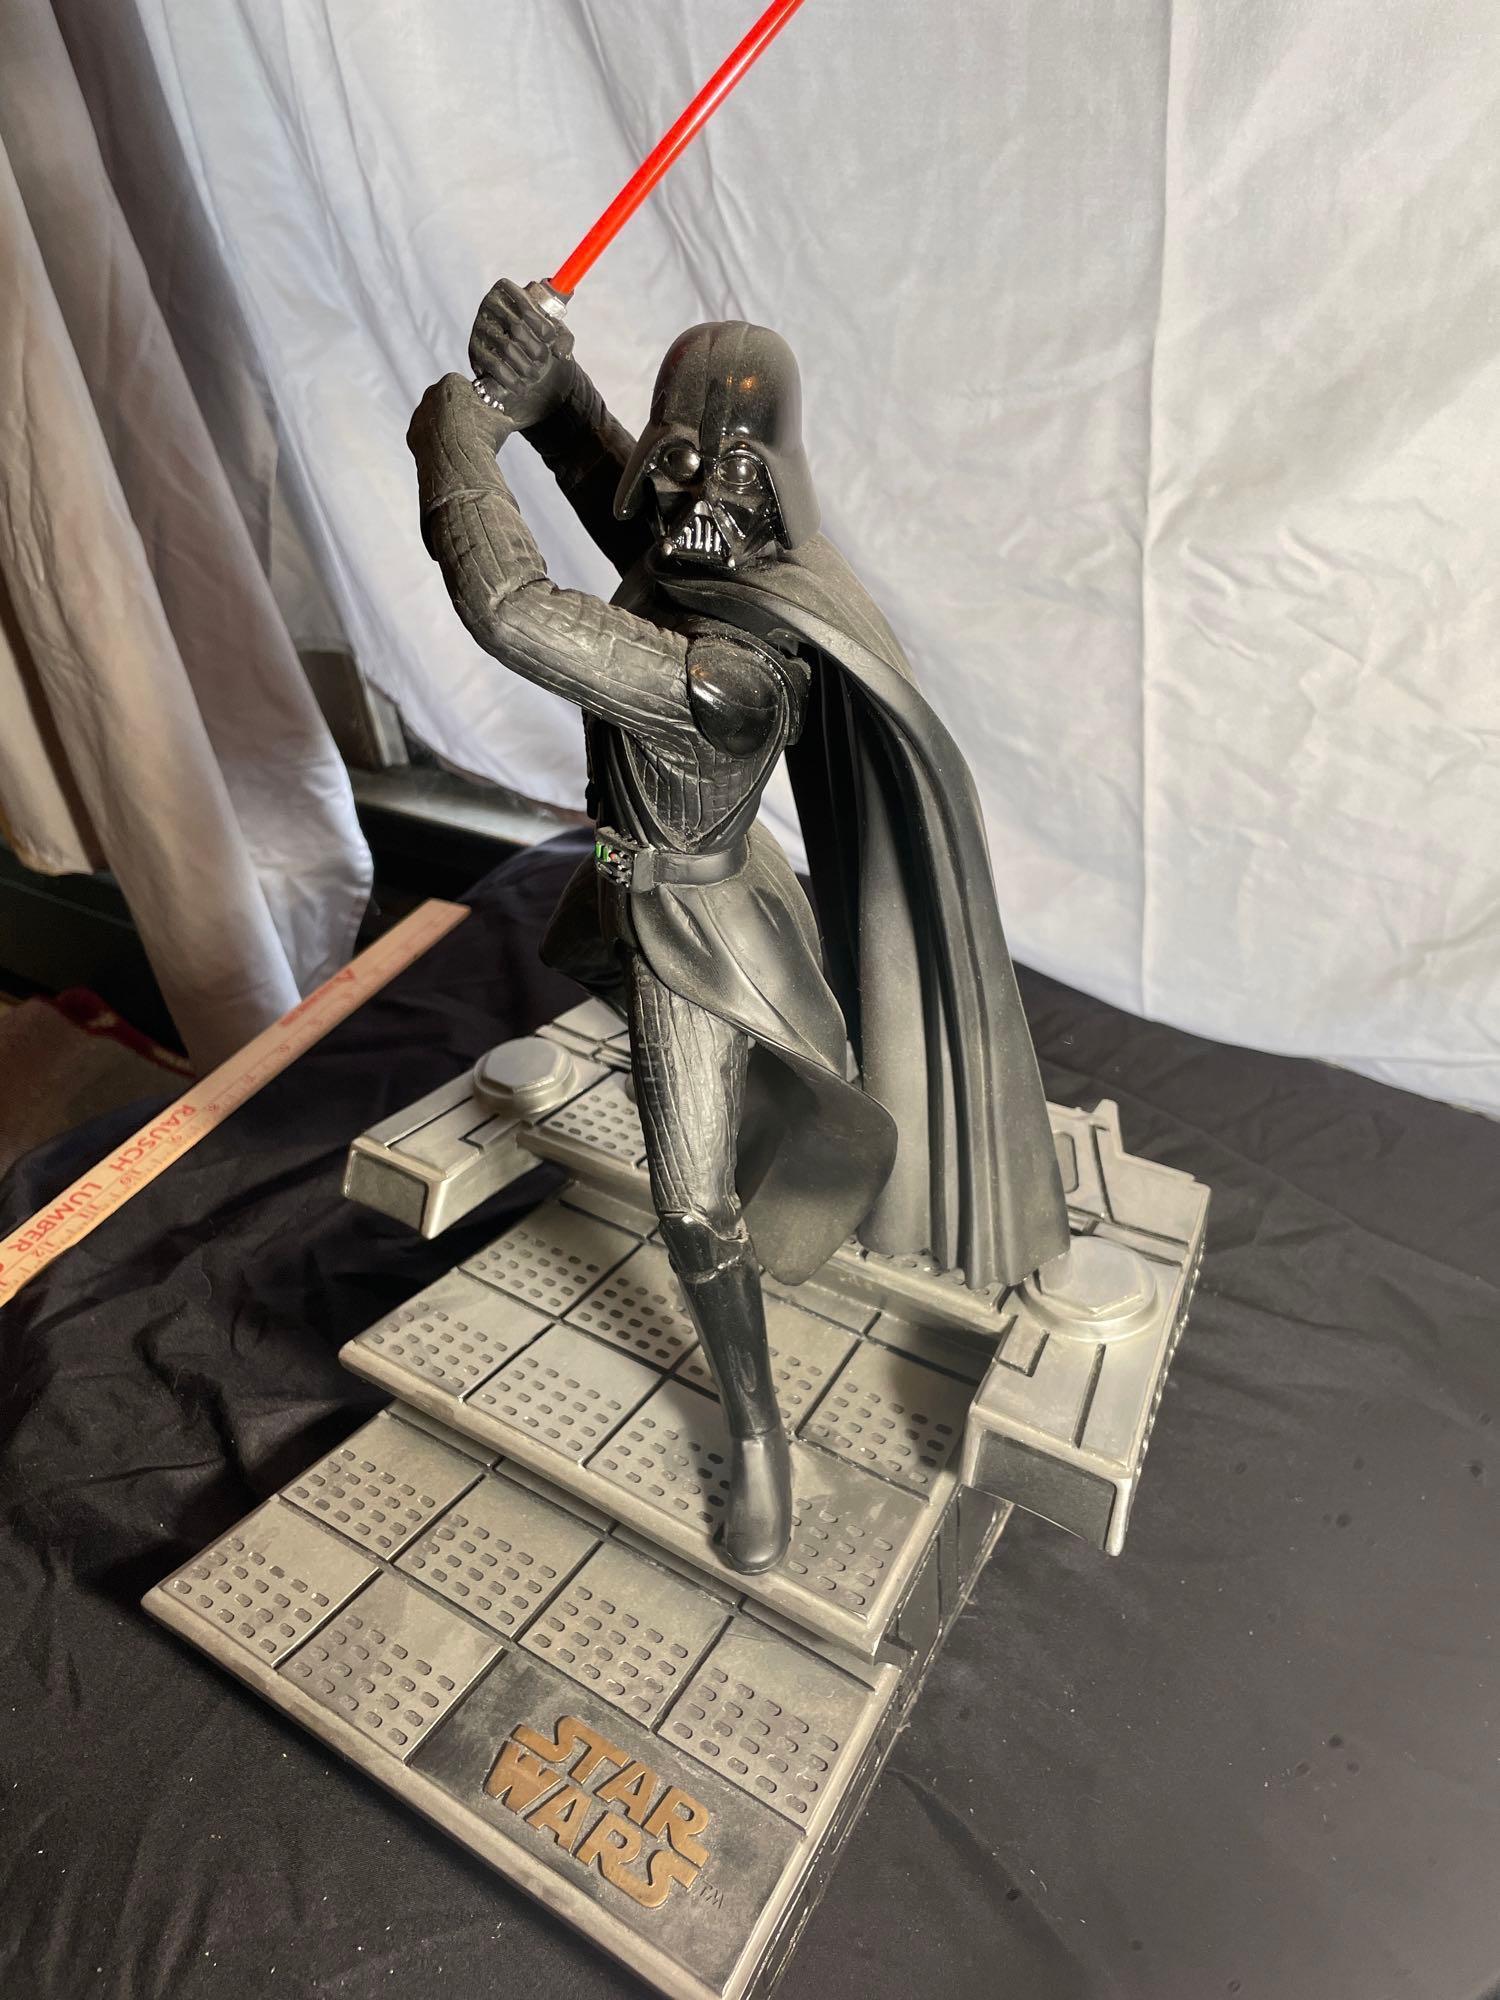 Star Wars Darth Vader Cinema Cast Statue